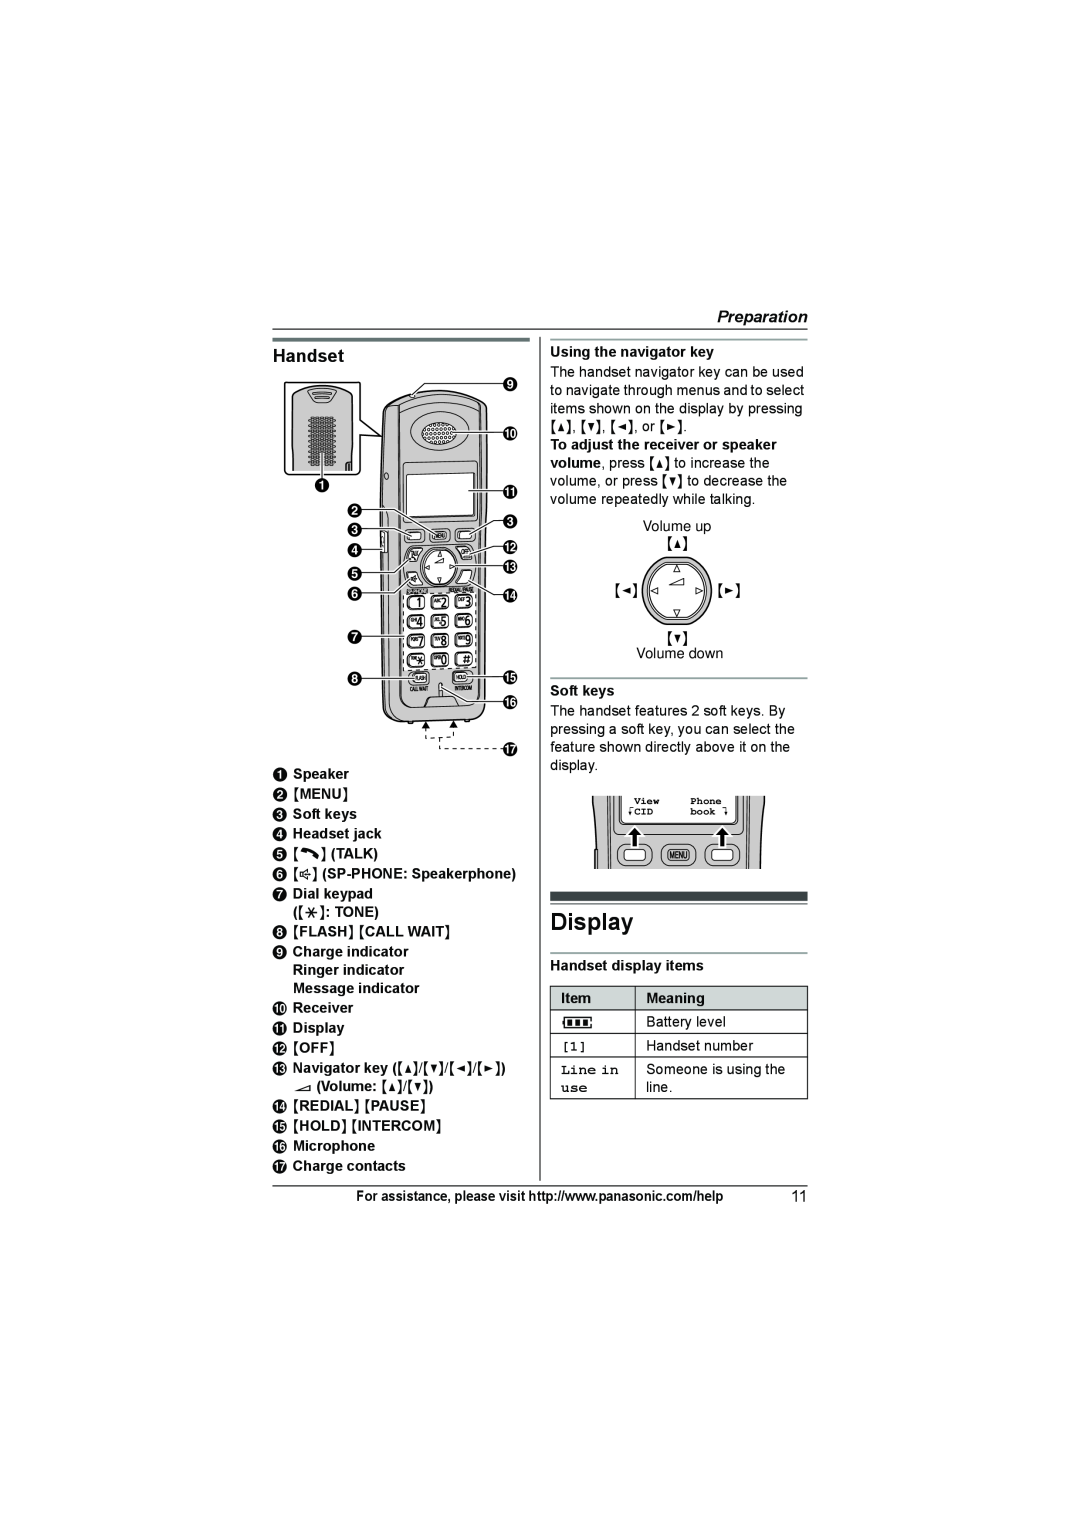 Panasonic KX-TG9371 Display, Handset, Preparation, I J Ak B Cc Dl E M F N G Ho P Q, Using the navigator key, Soft keys 